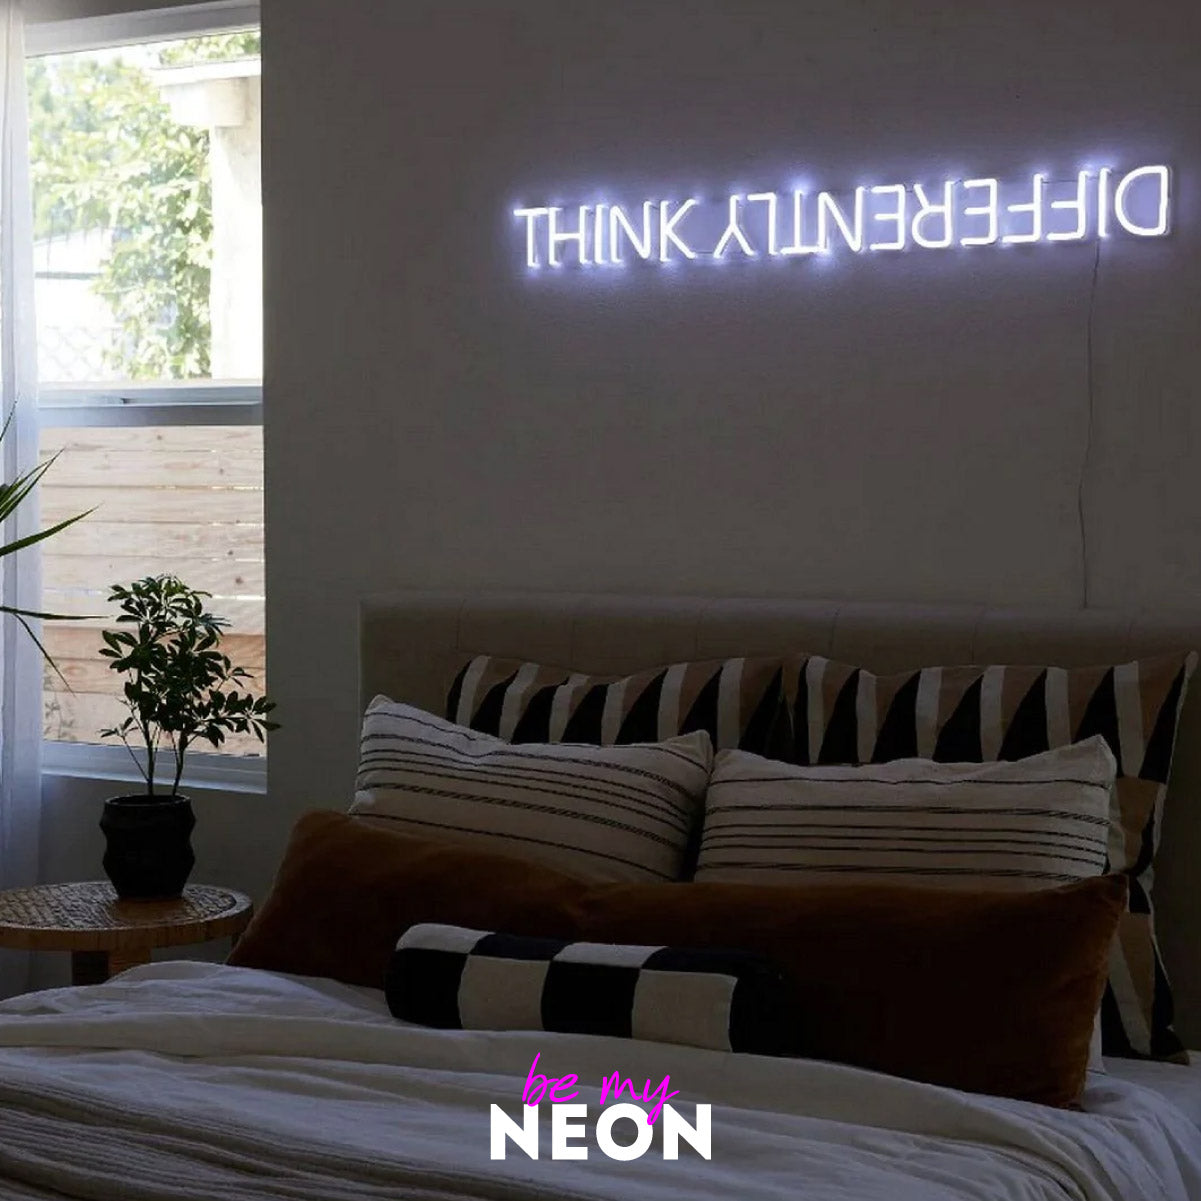 "Think Diffrently" LED Neonschild